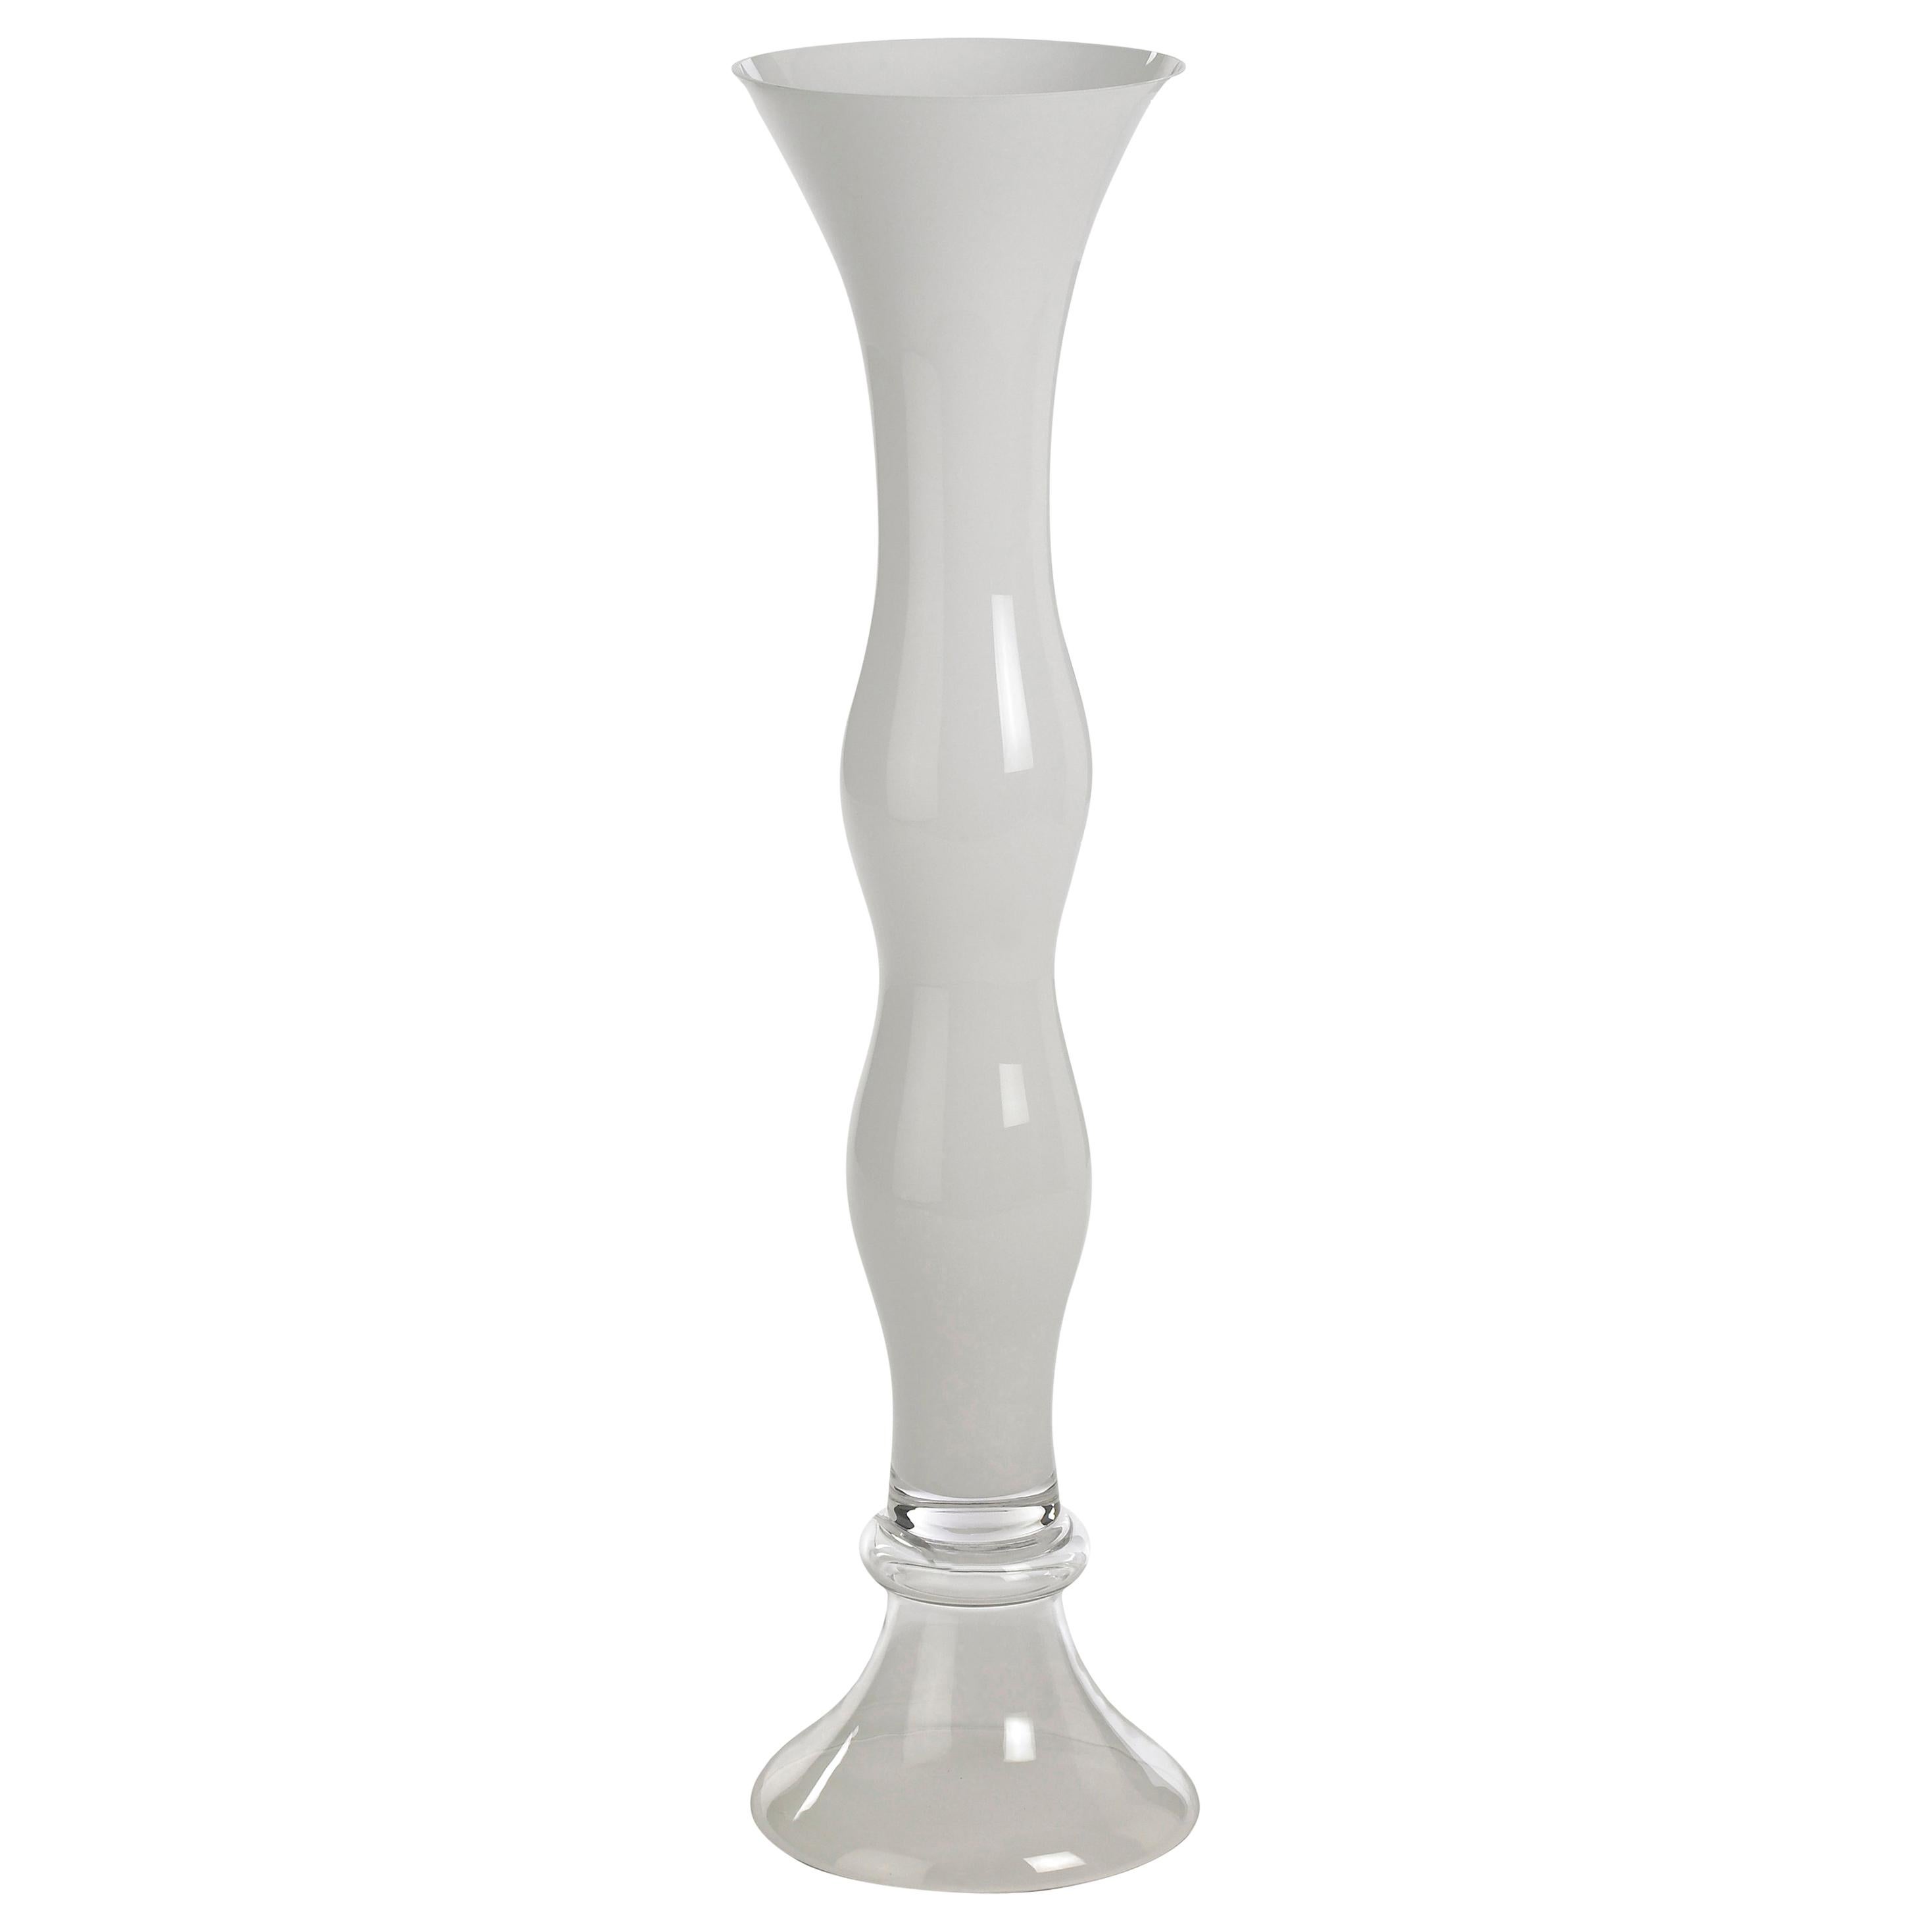 Vase Clex White, in Glass, Italy